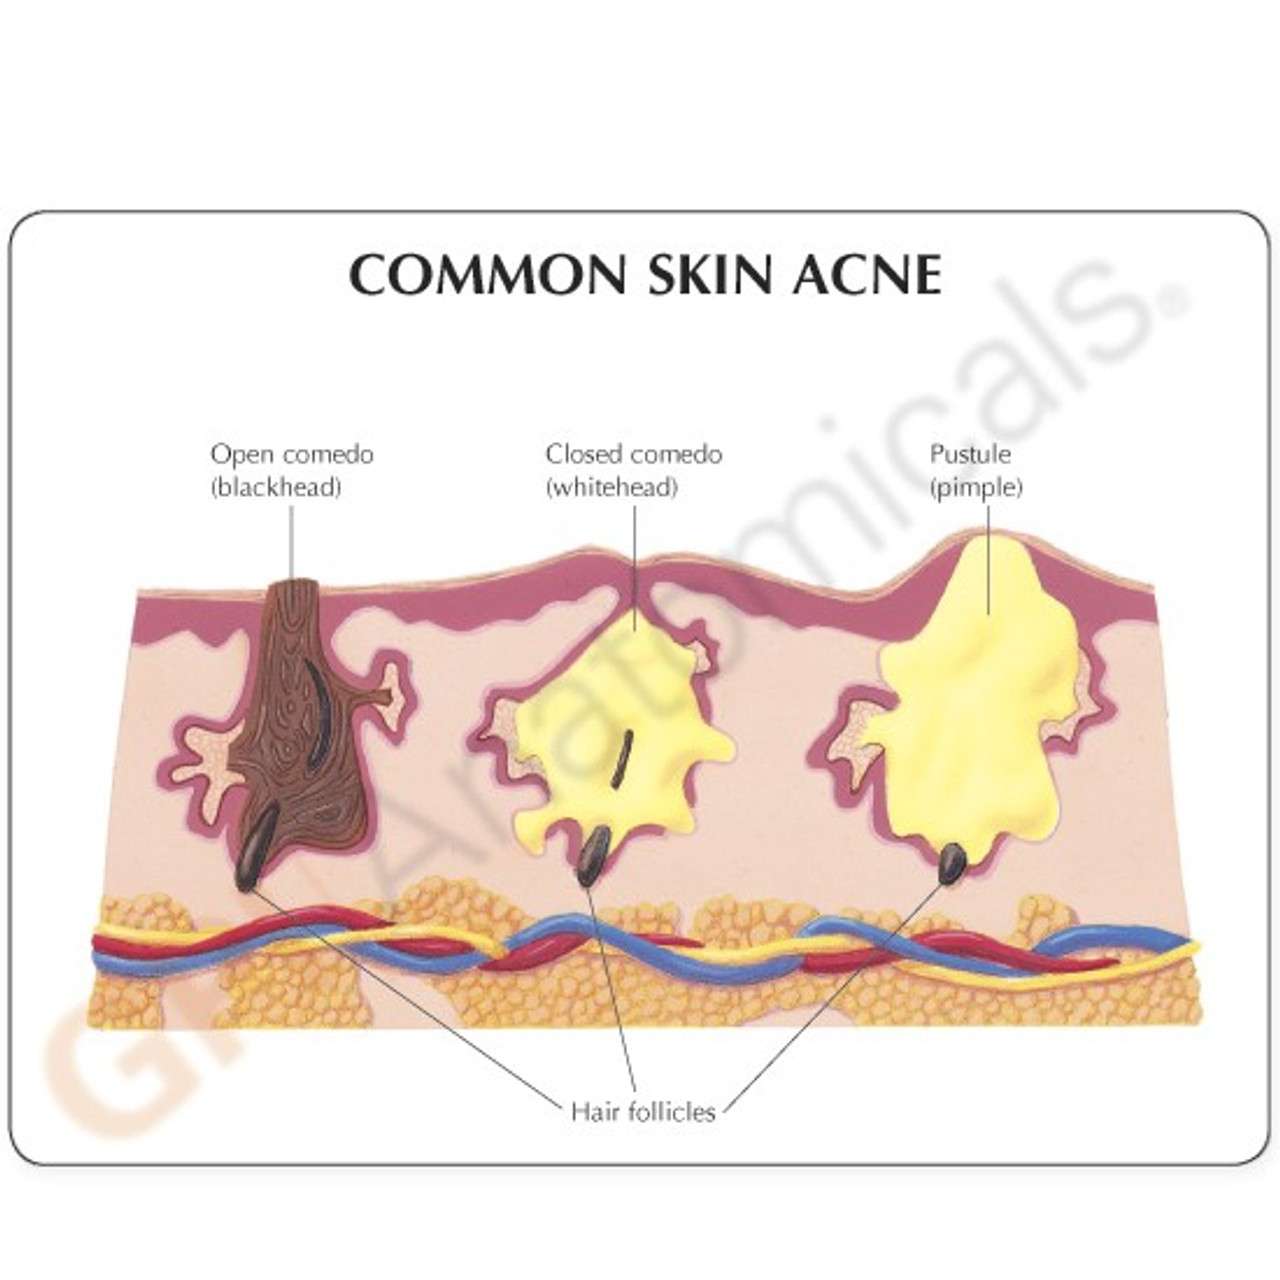 Skin Acne Model Description Card